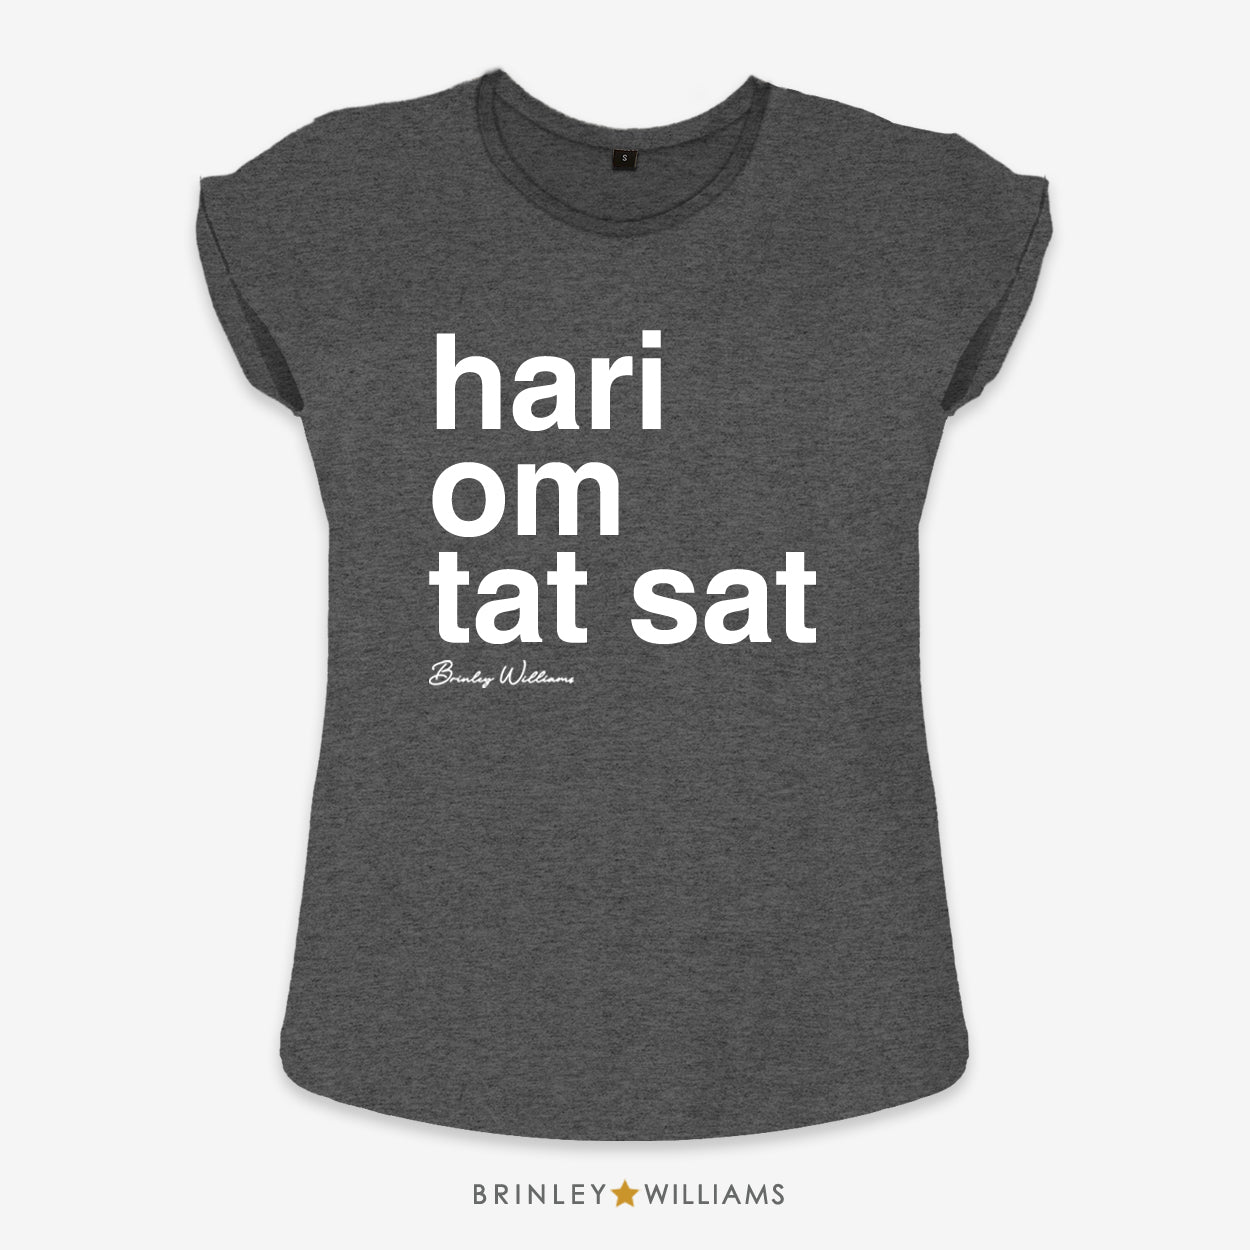 Hari Om Tat Sat Rolled Sleeve T-shirt - Charcoal